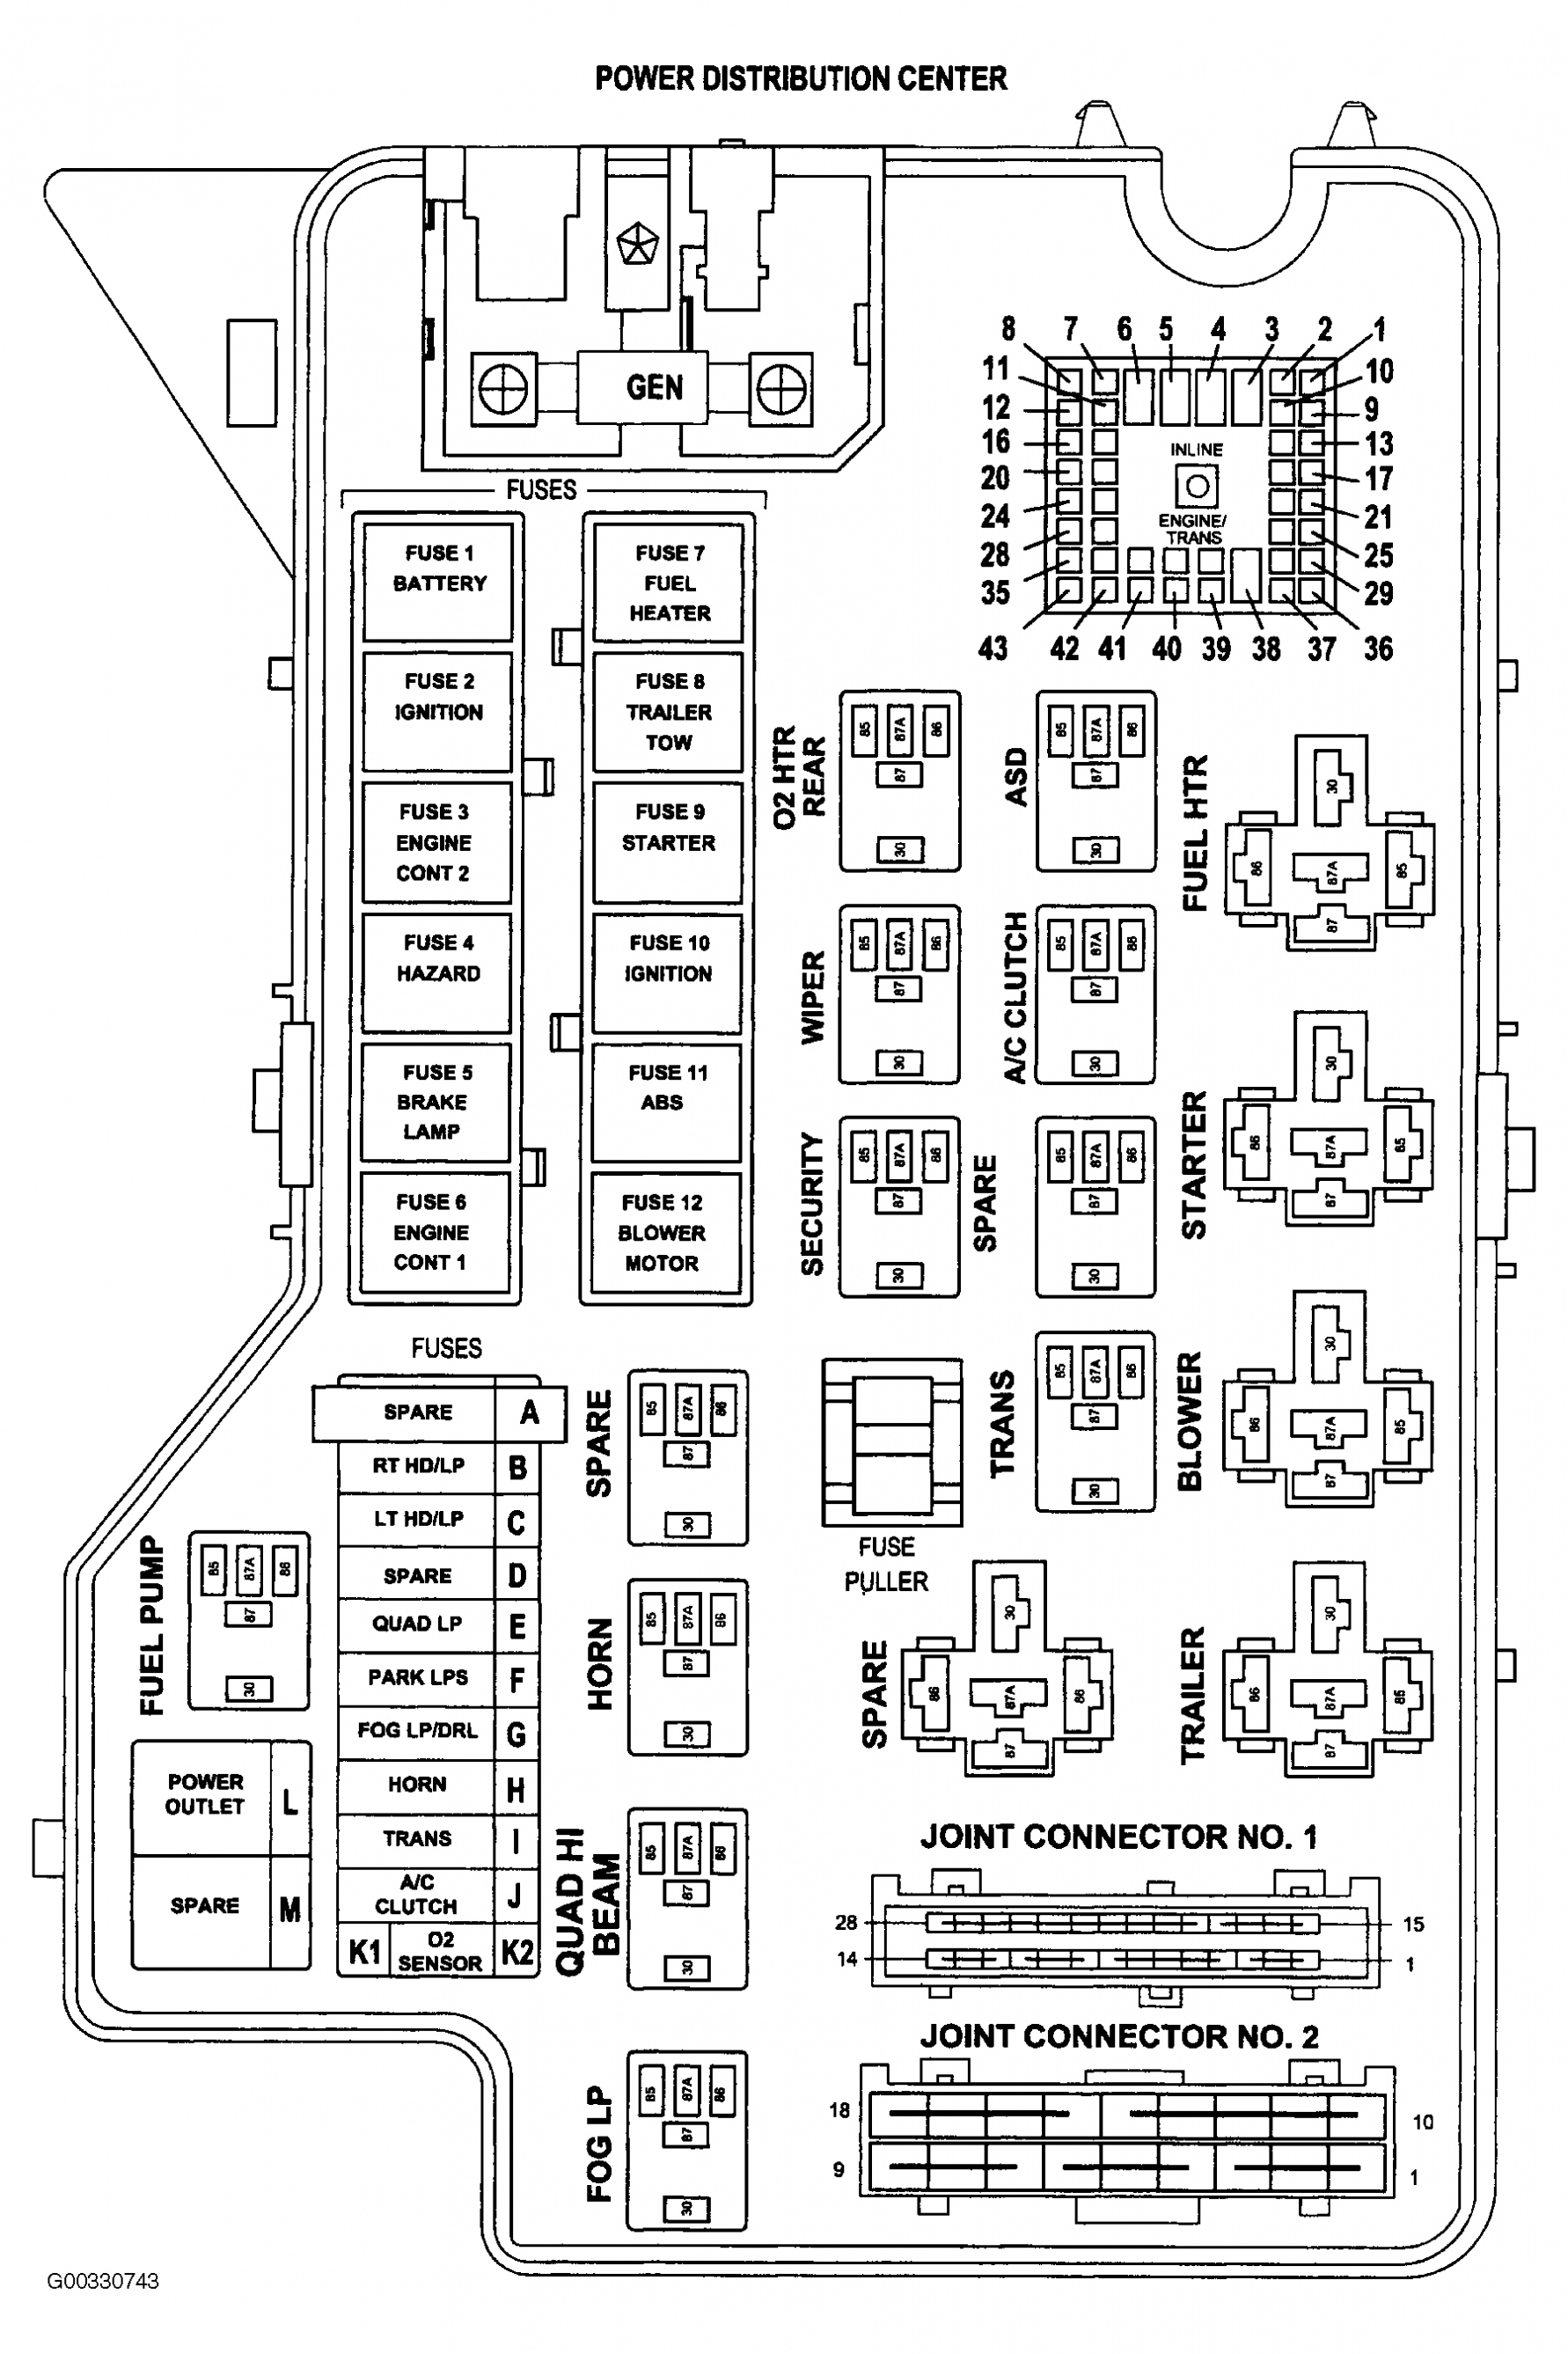 2002 Dodge Dakota Fuse Box Diagram | Wiring Diagram - 2002 Dodge Dakota Wiring Diagram